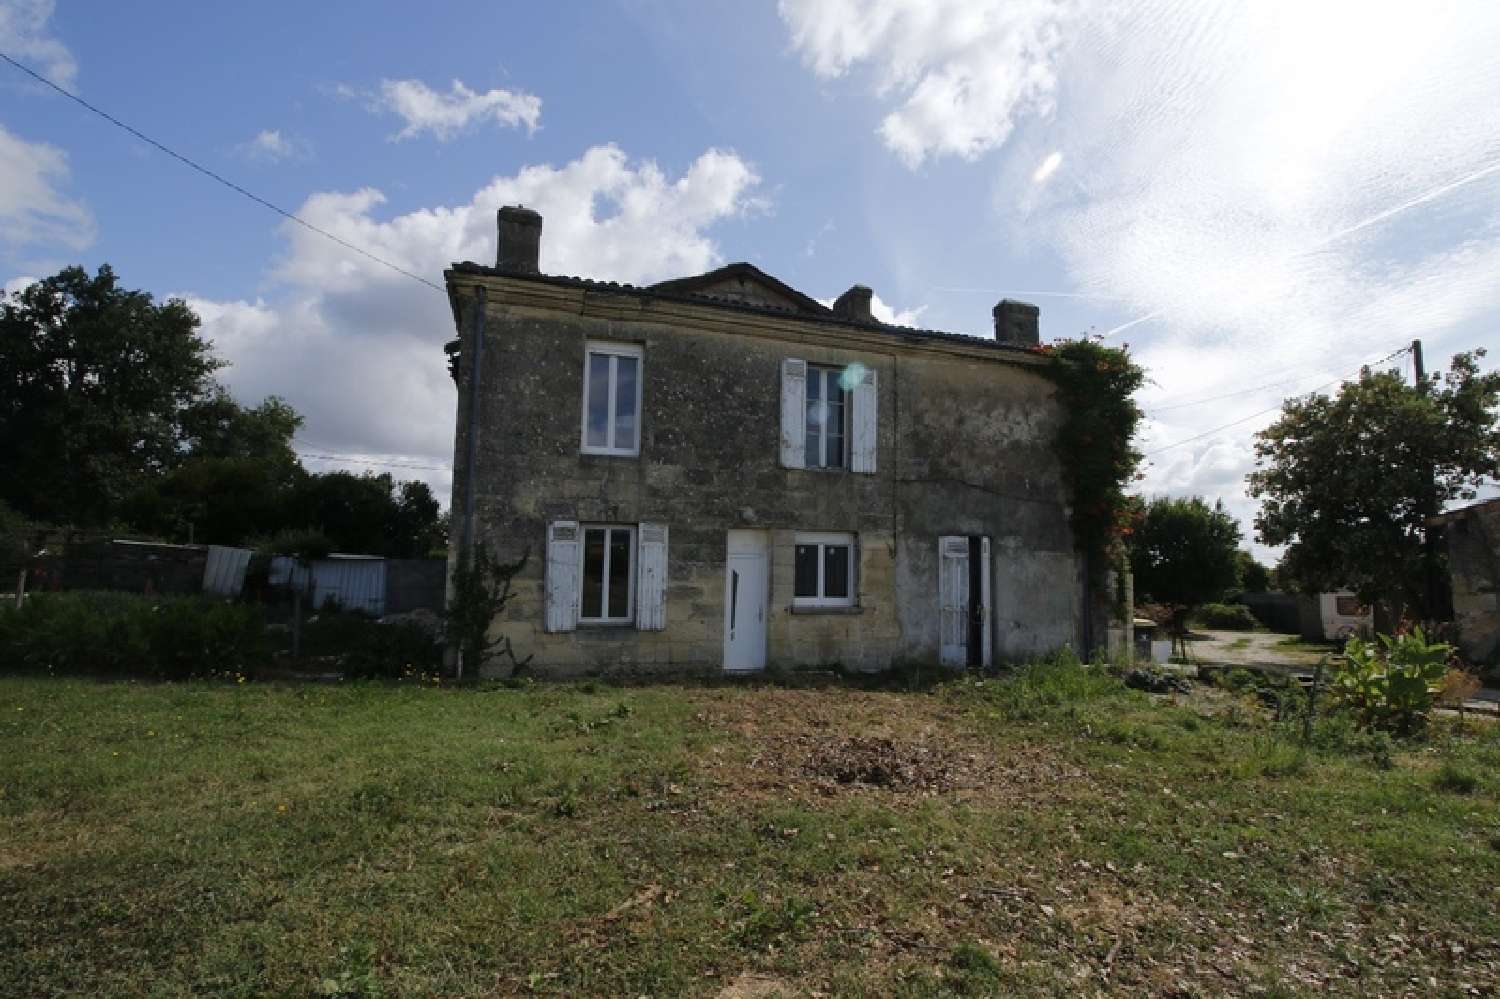  à vendre maison Baron Gironde 4